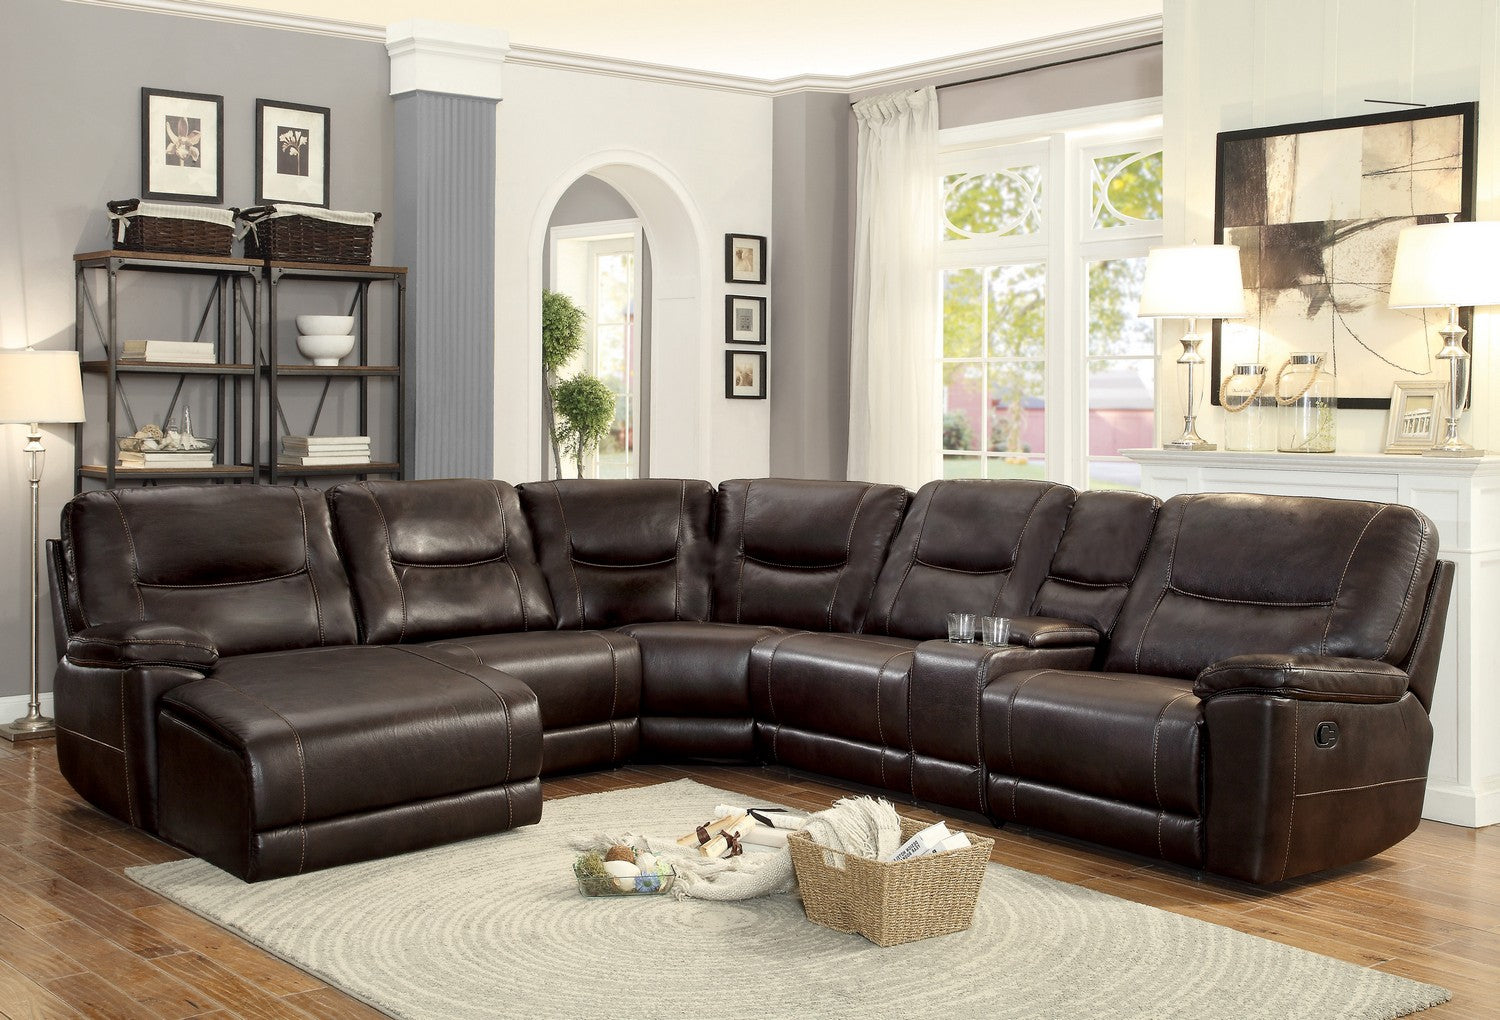 dark leather sectional sofa